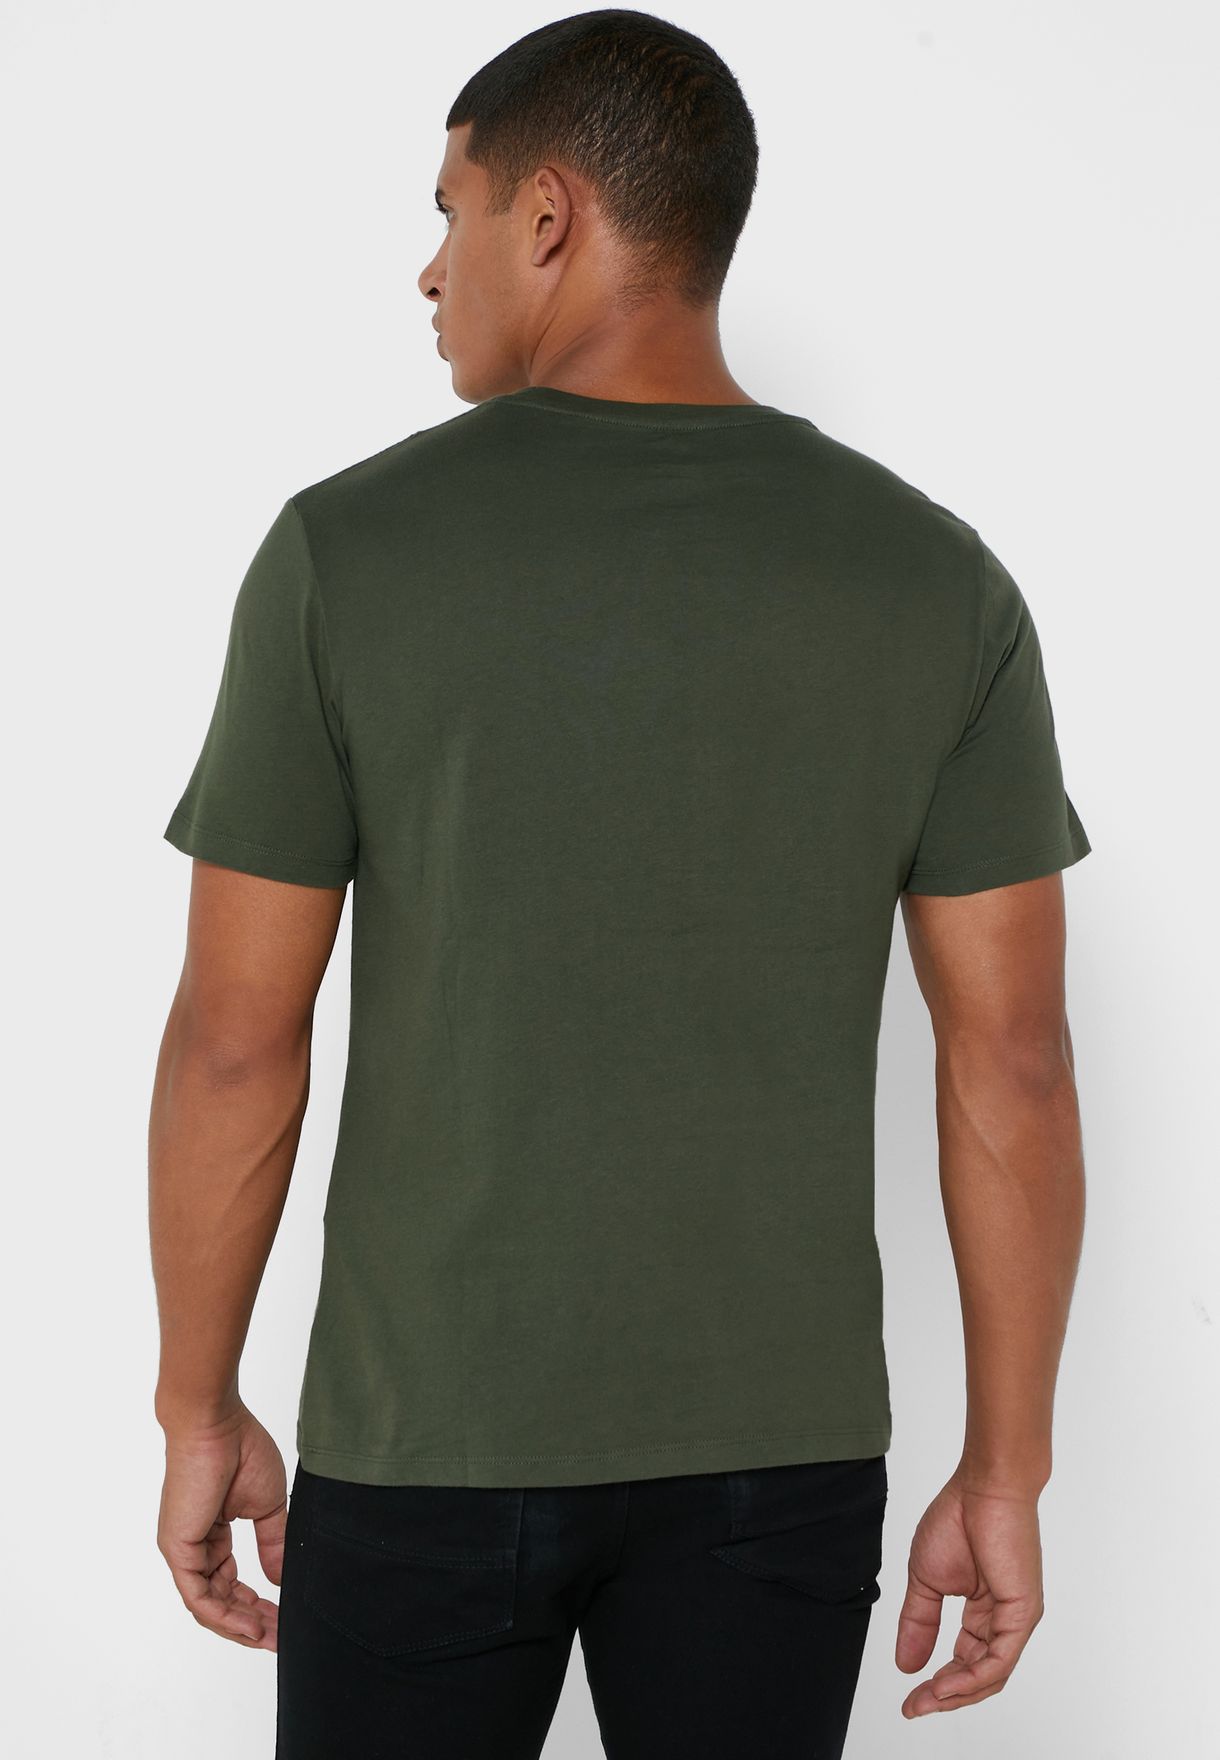 Details about   LEVI'S Men's Green Pocket Crew Neck T-Shirt NEW 2XL XXL 